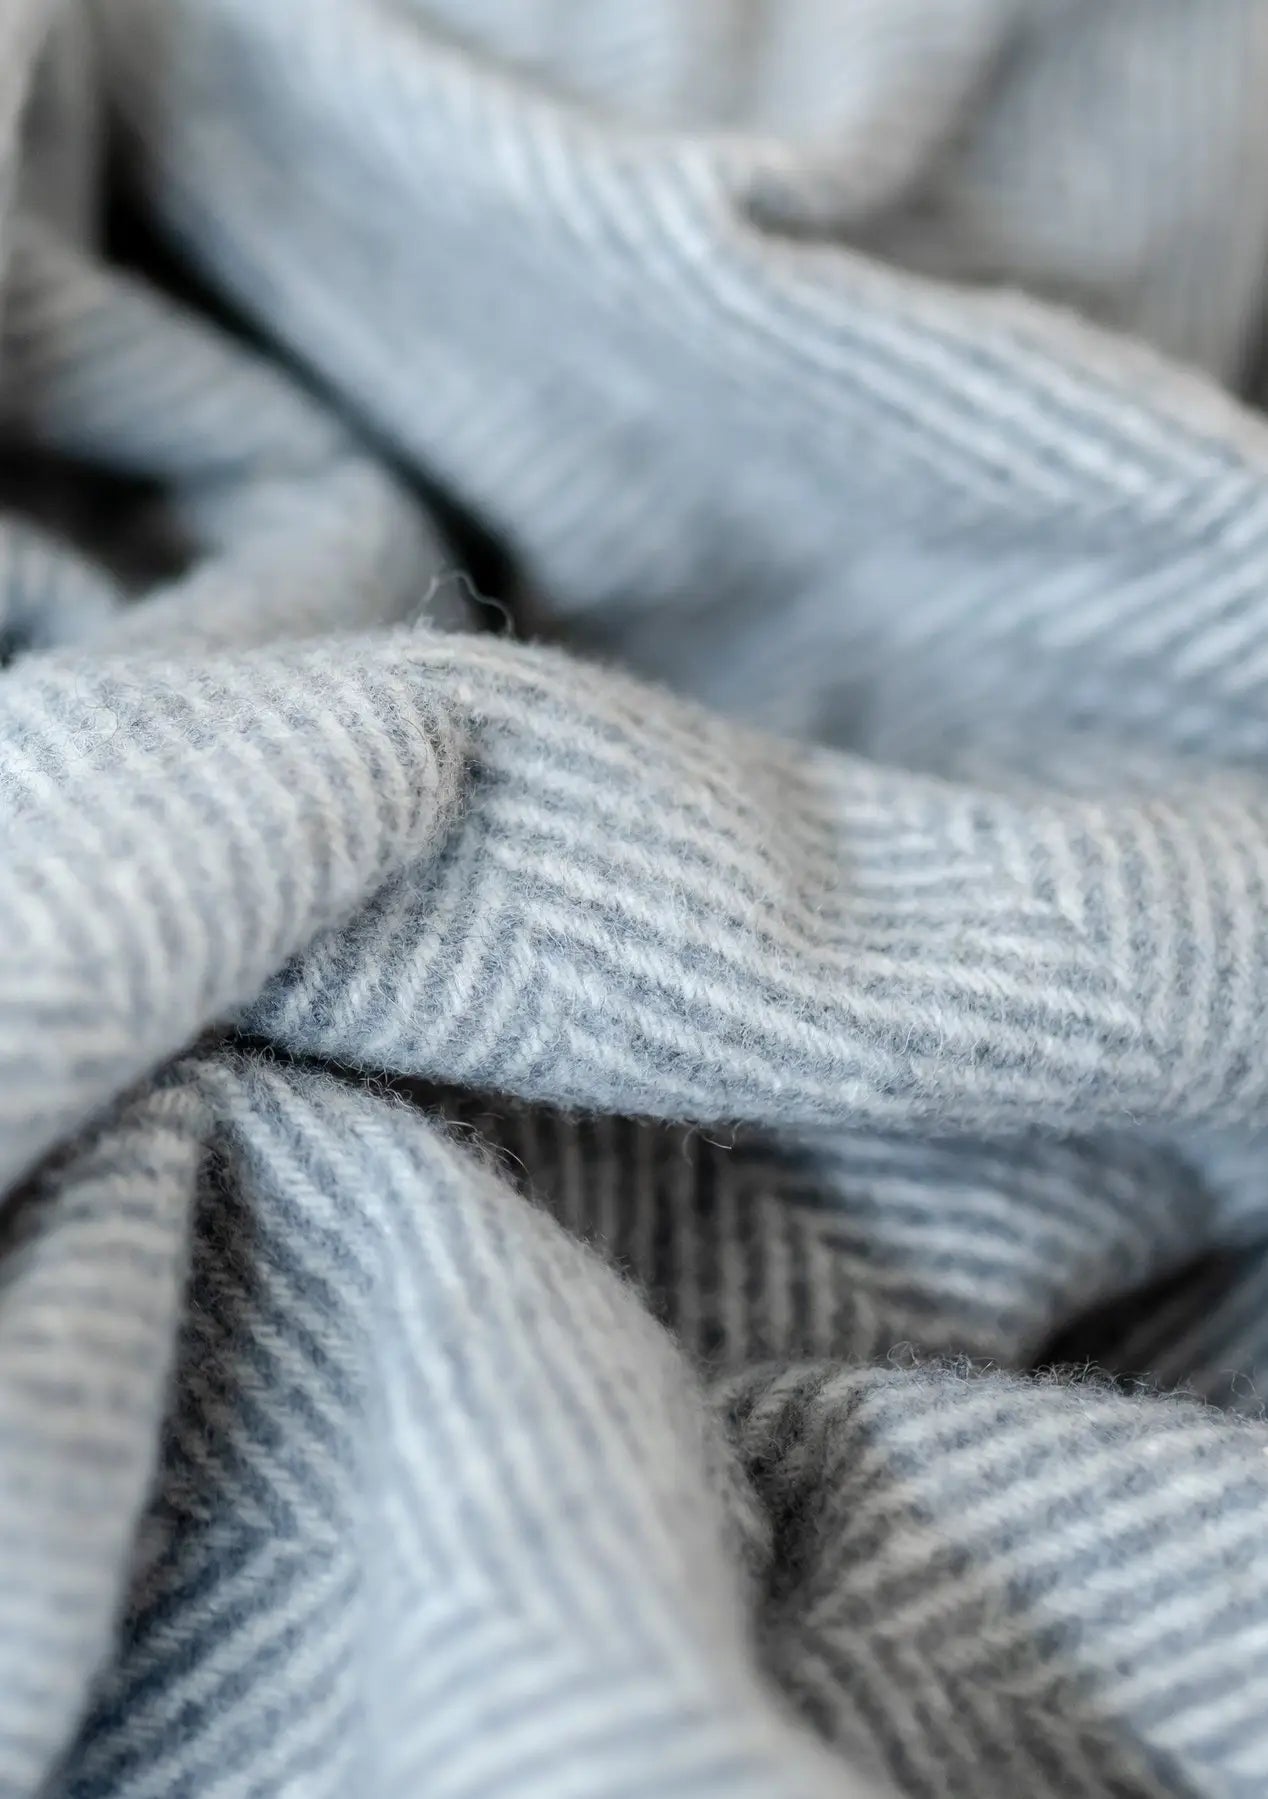 Recycled Wool Picnic Blanket in Charcoal Grey Herringbone